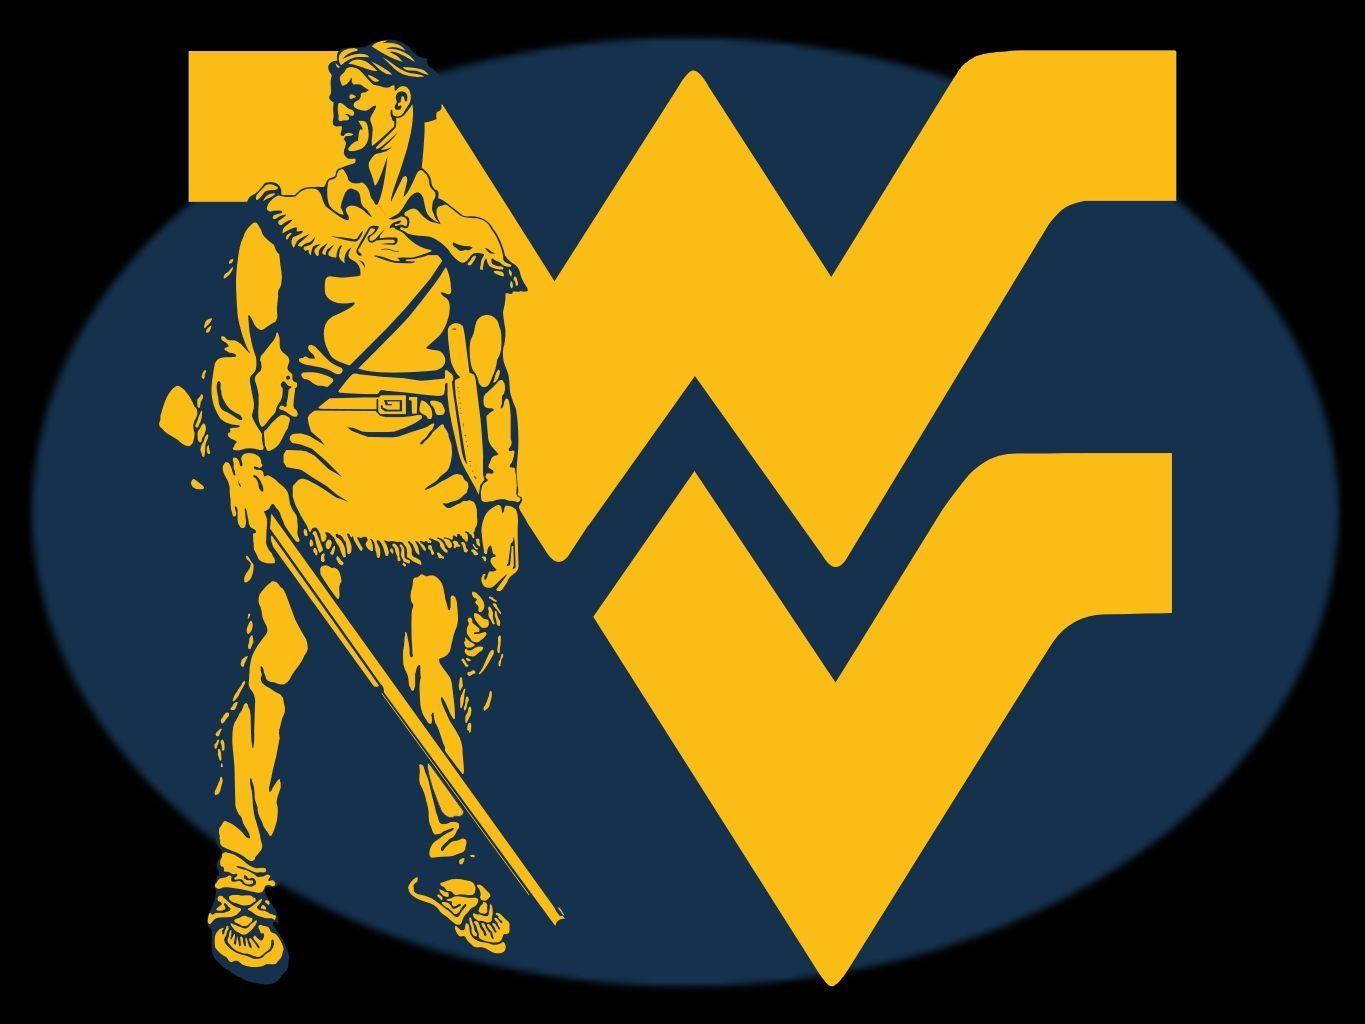 West Virginia Football Logo - University of West Virginia Mountaineers | United States | Pinterest